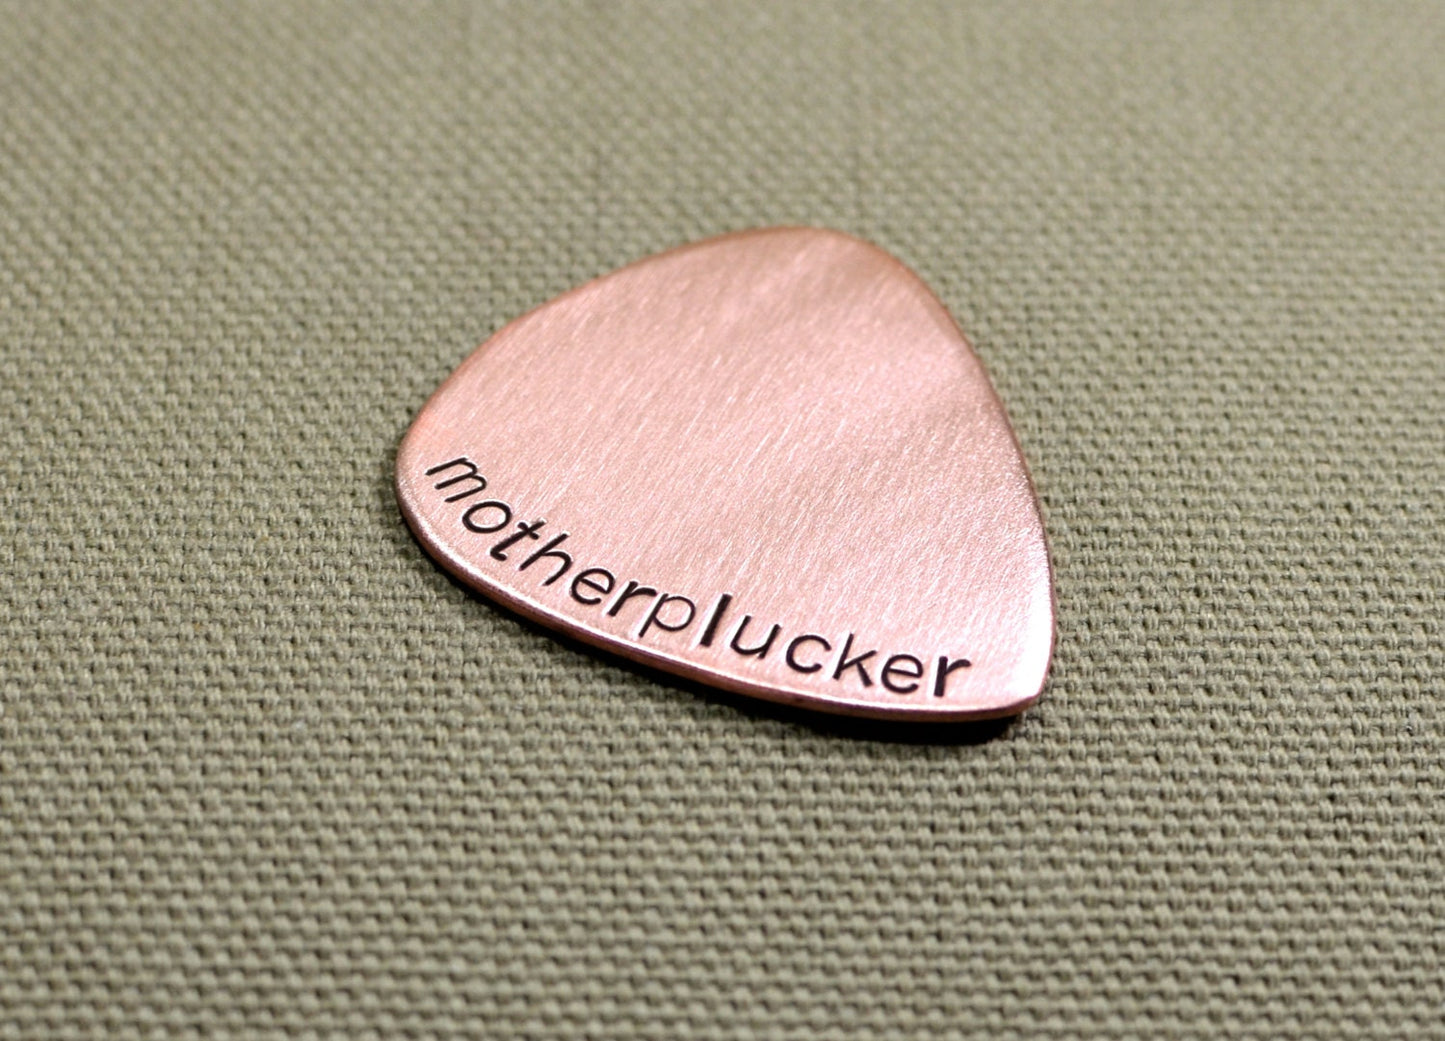 Motherplucker copper guitar pick